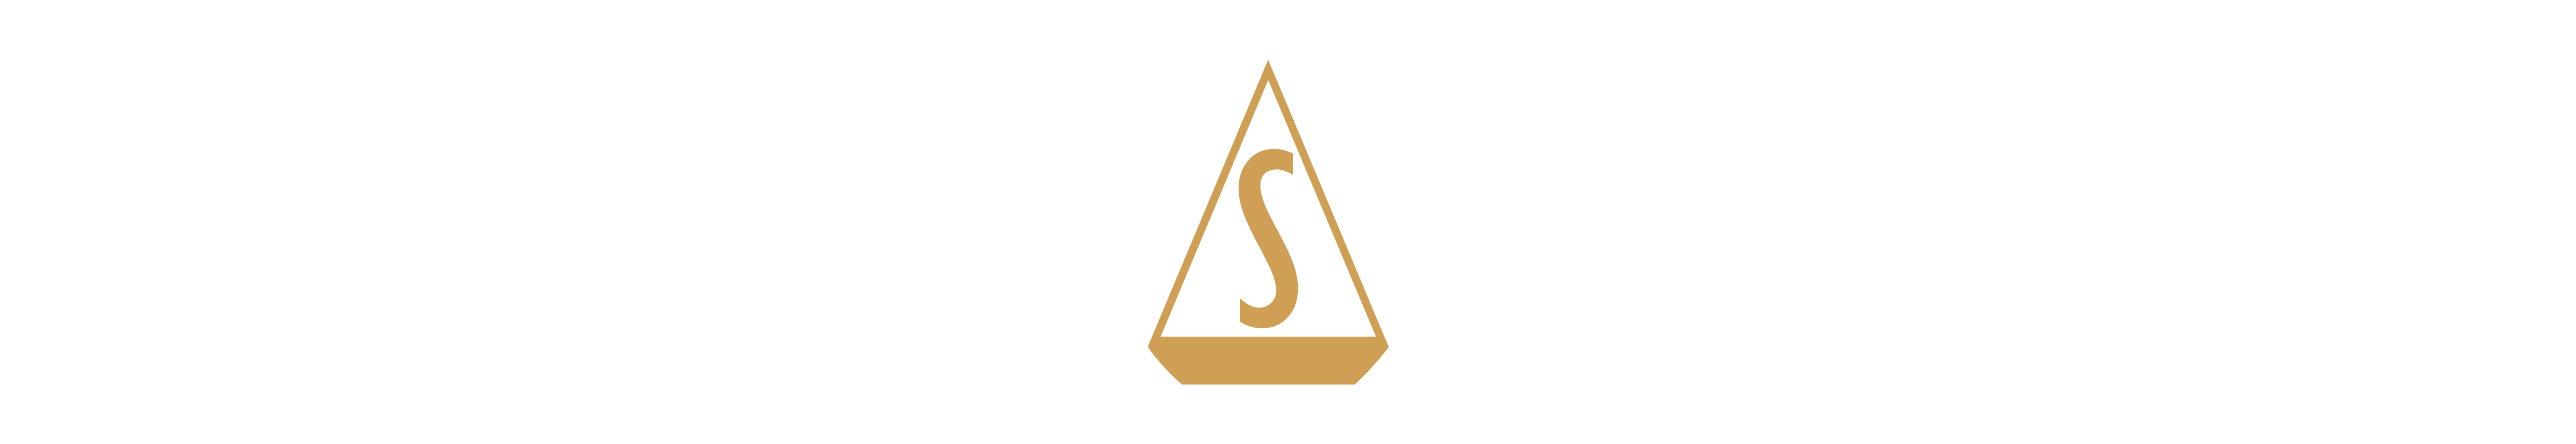 SalameroAbogados-logo-neg